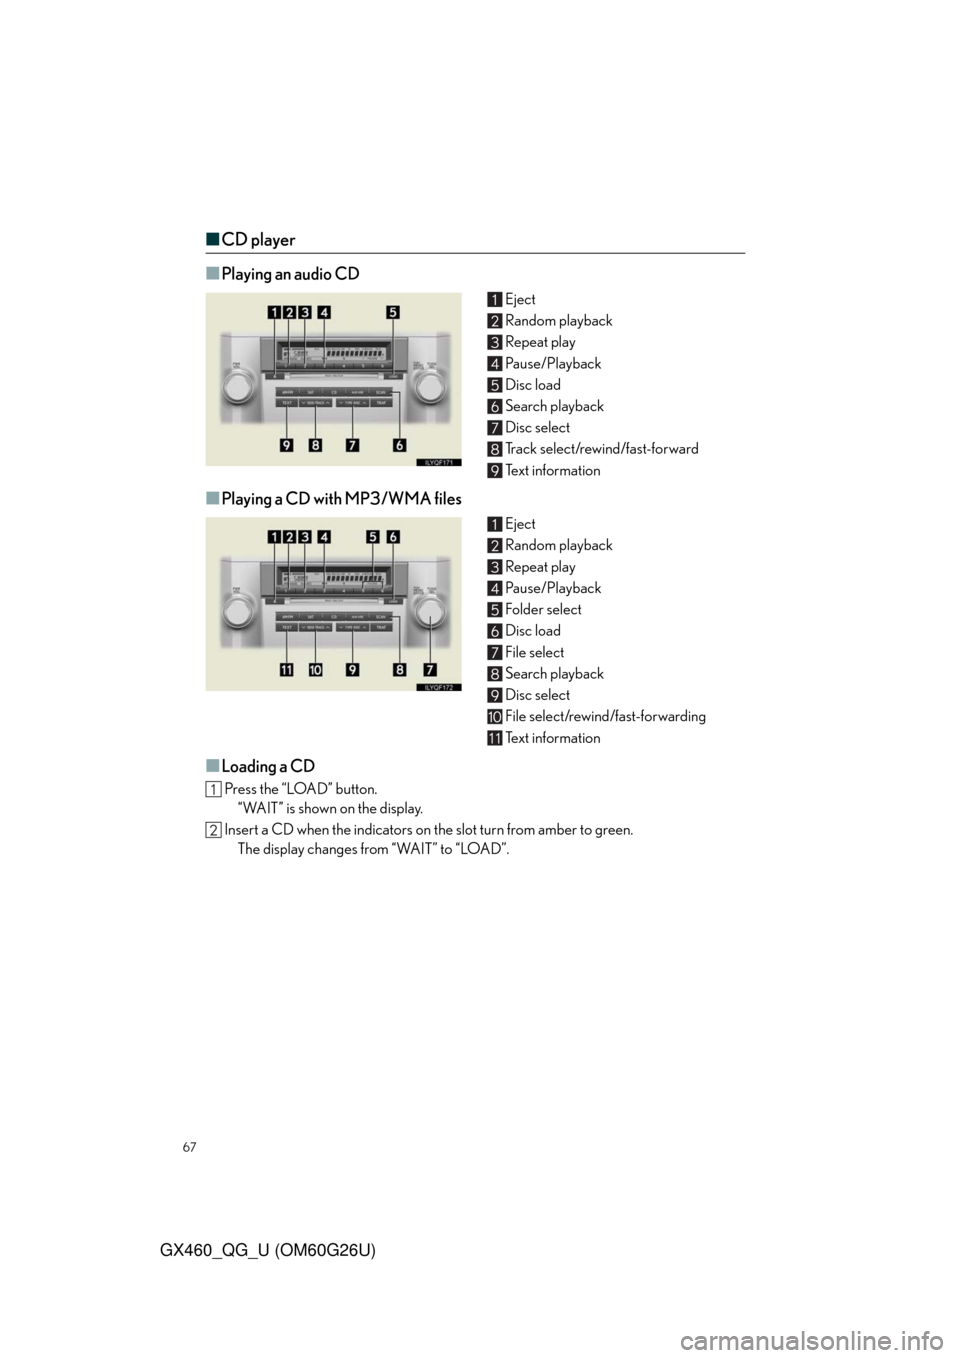 Lexus GX460 2011  Do-It-Yourself Maintenance / LEXUS 2011 GX460 OWNERS MANUAL QUICK GUIDE (OM60G26U) 67
GX460_QG_U (OM60G26U)
■CD player
■
Playing an audio CD
Eject
Random playback 
Repeat play
Pause/Playback
Disc load
Search playback
Disc select
Track select/rewind/fast-forward
Te x t  i n f o r